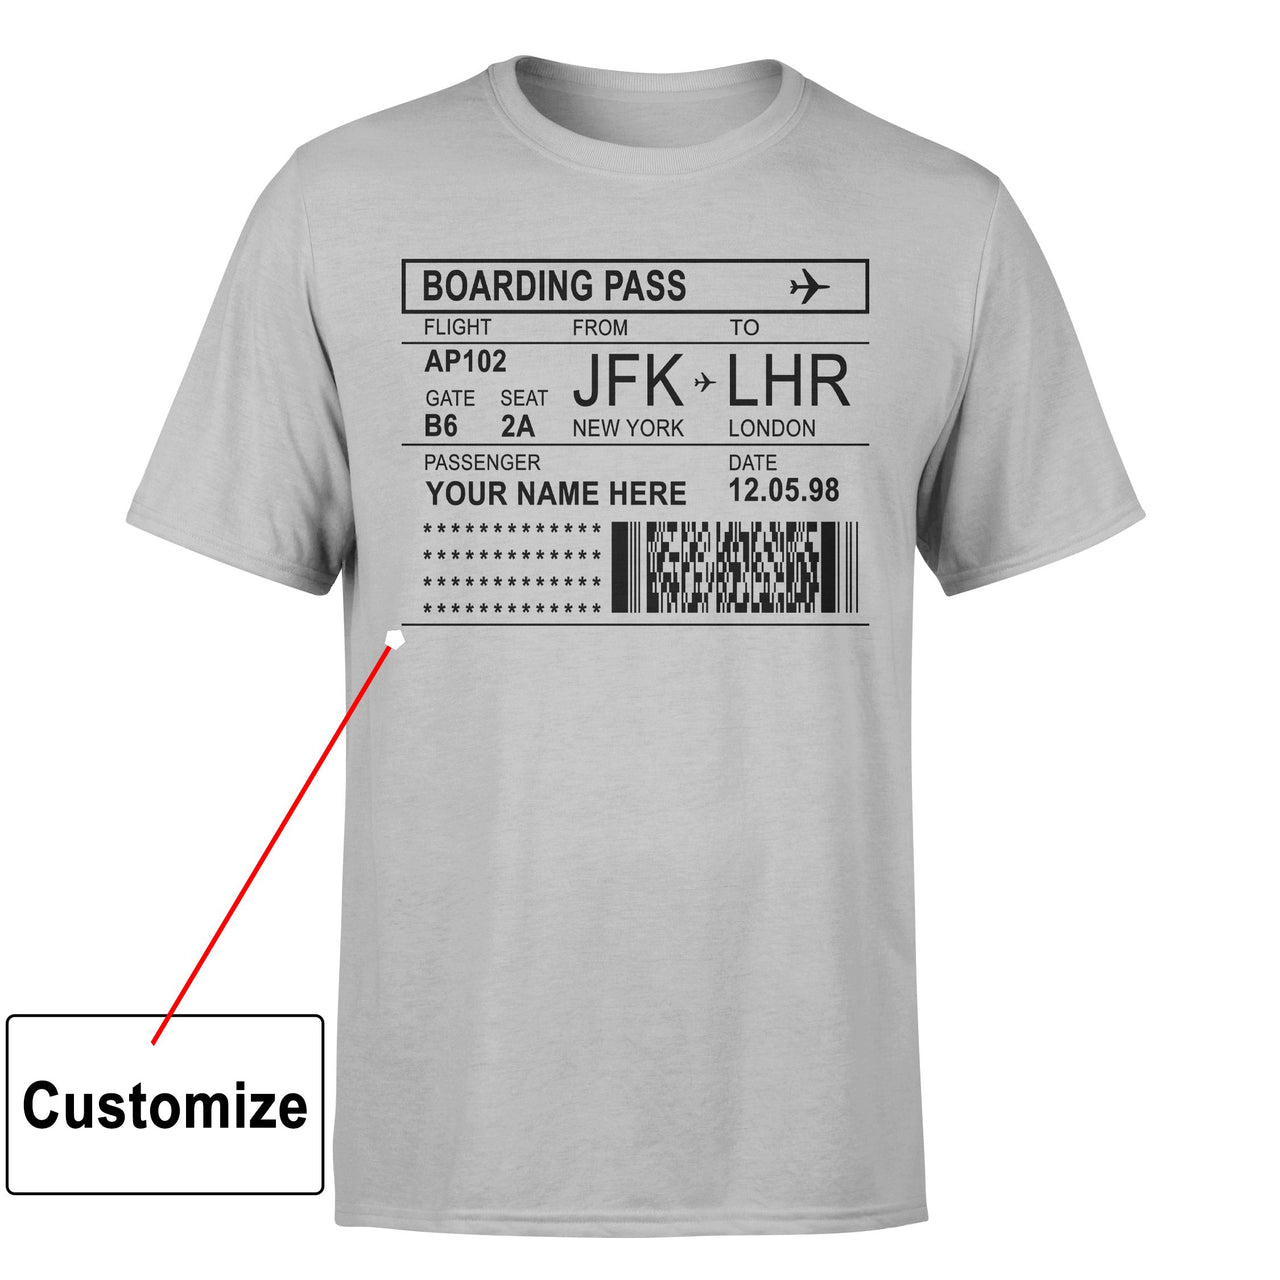 Customizable BOARDING PASS Designed T-Shirts